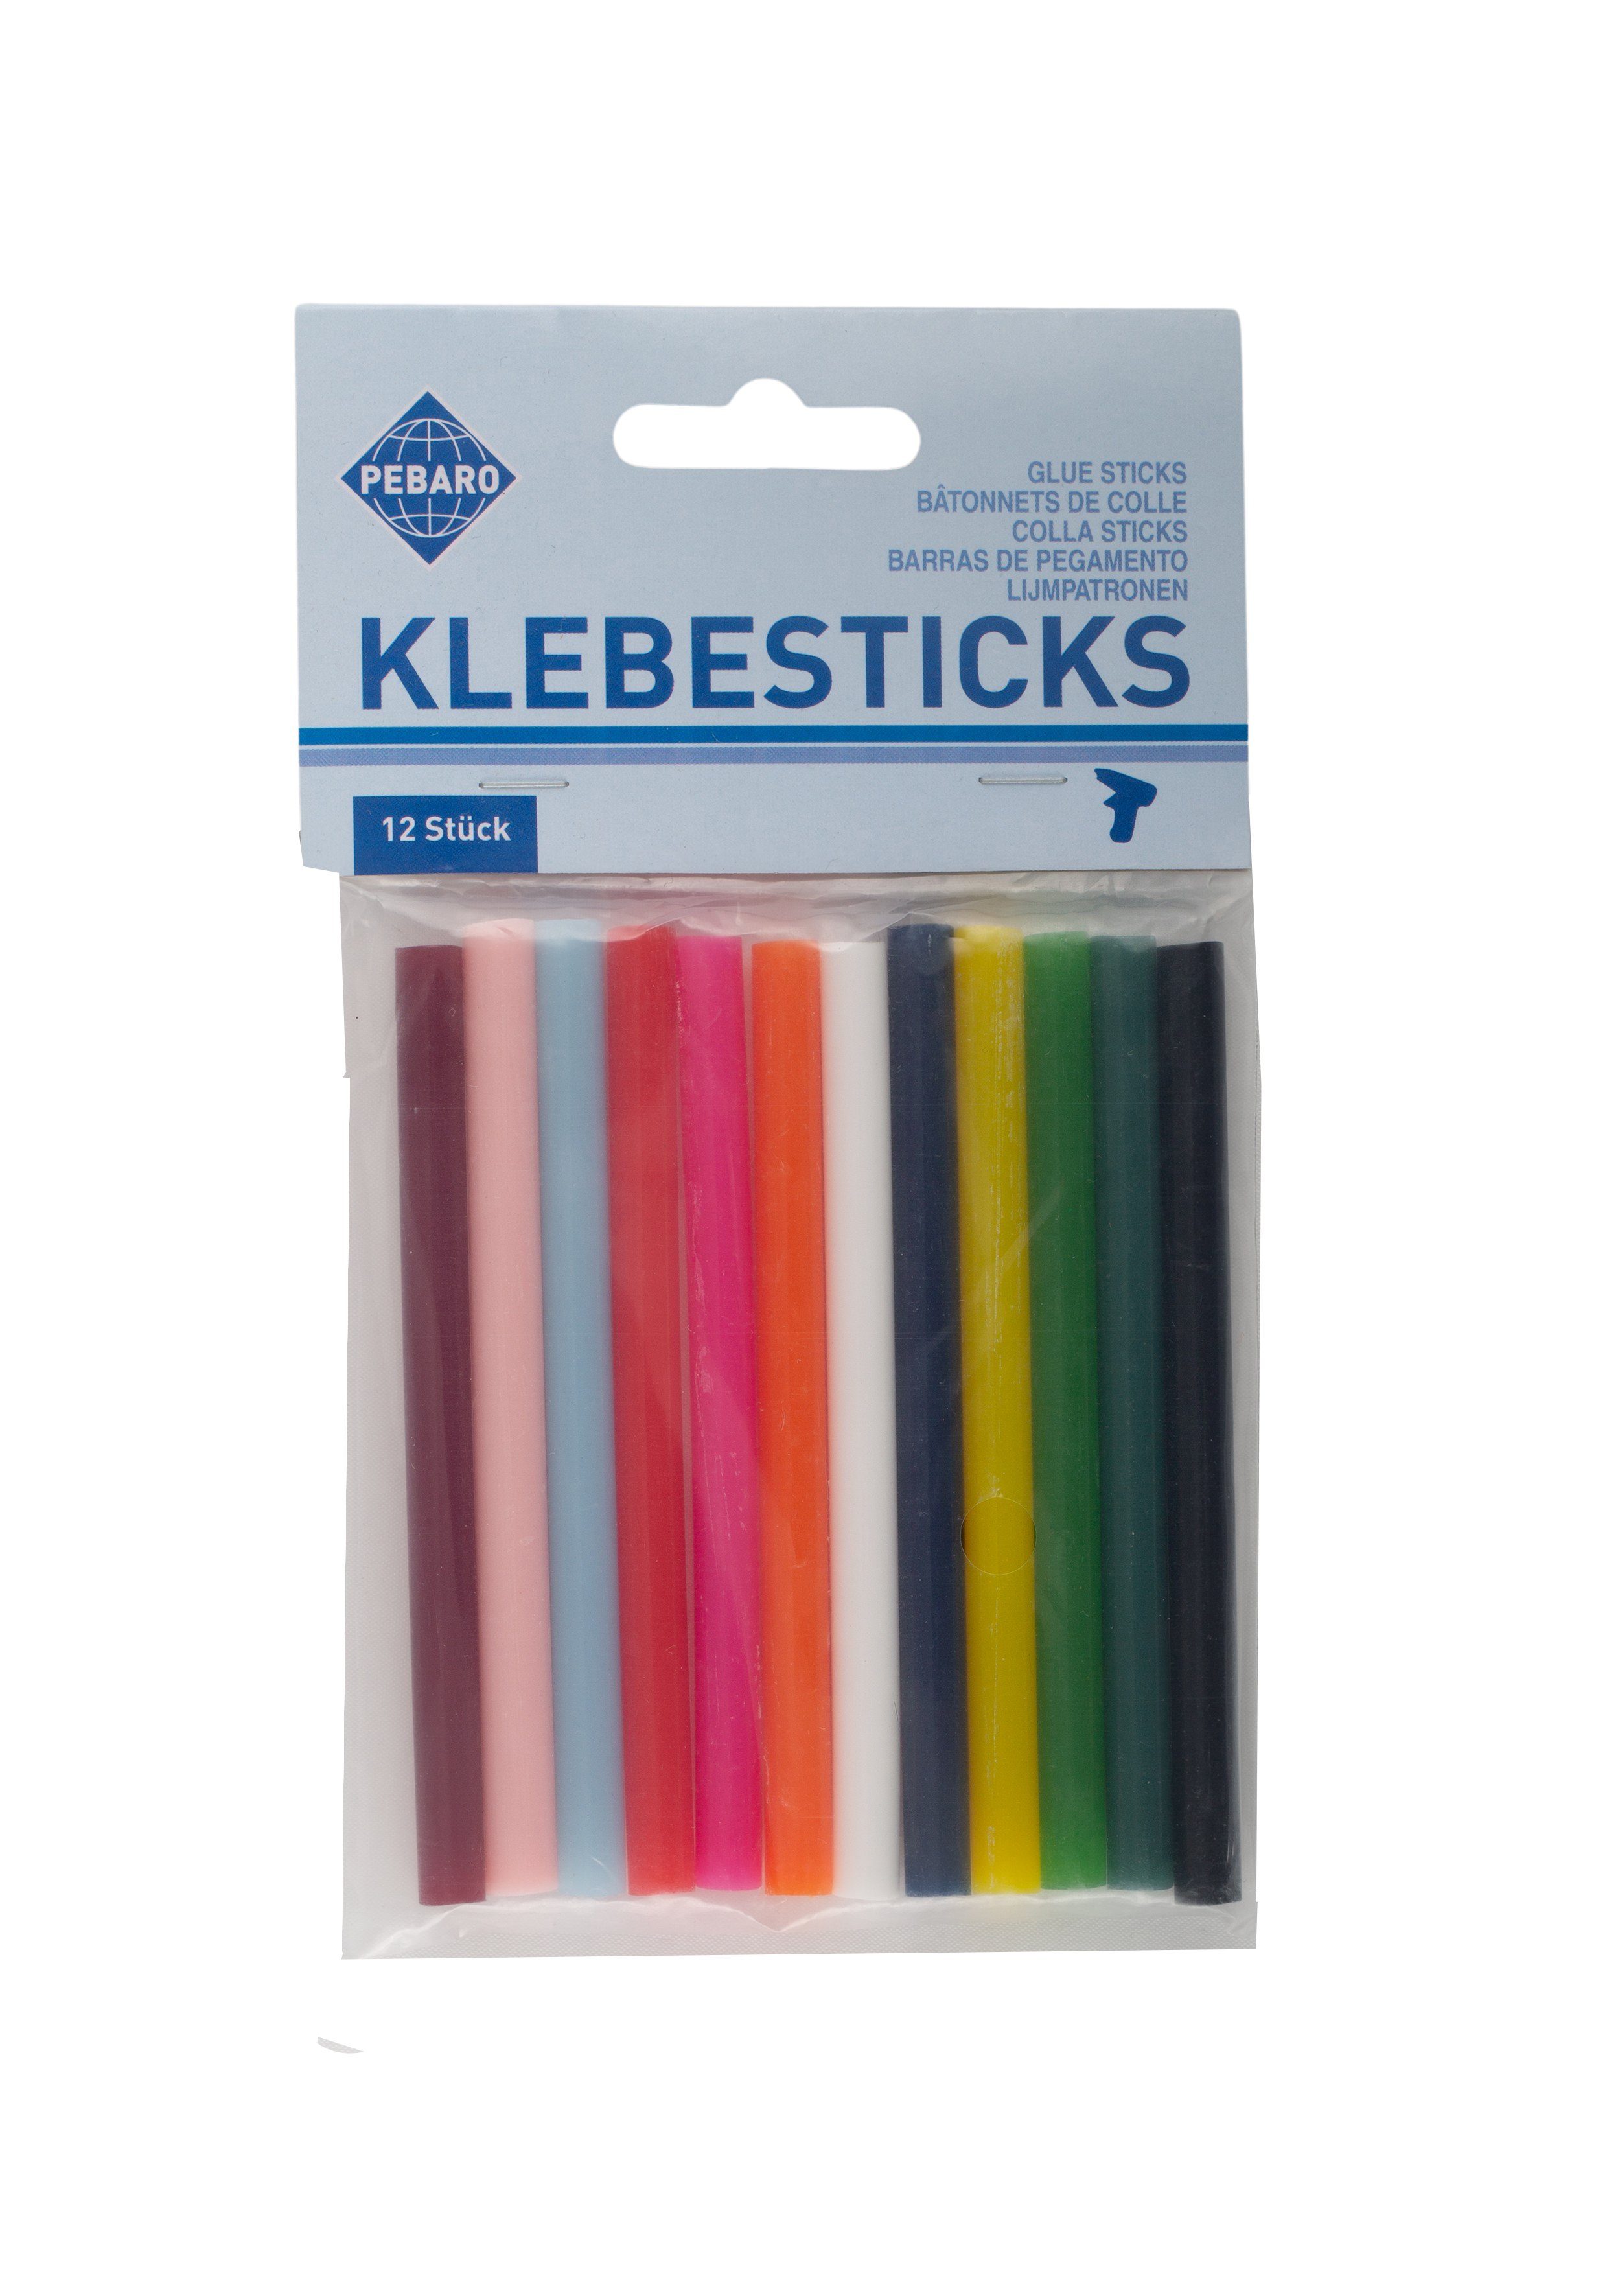 Klebesticks, 12 farbig, 269BUNT Kreativset Pebaro